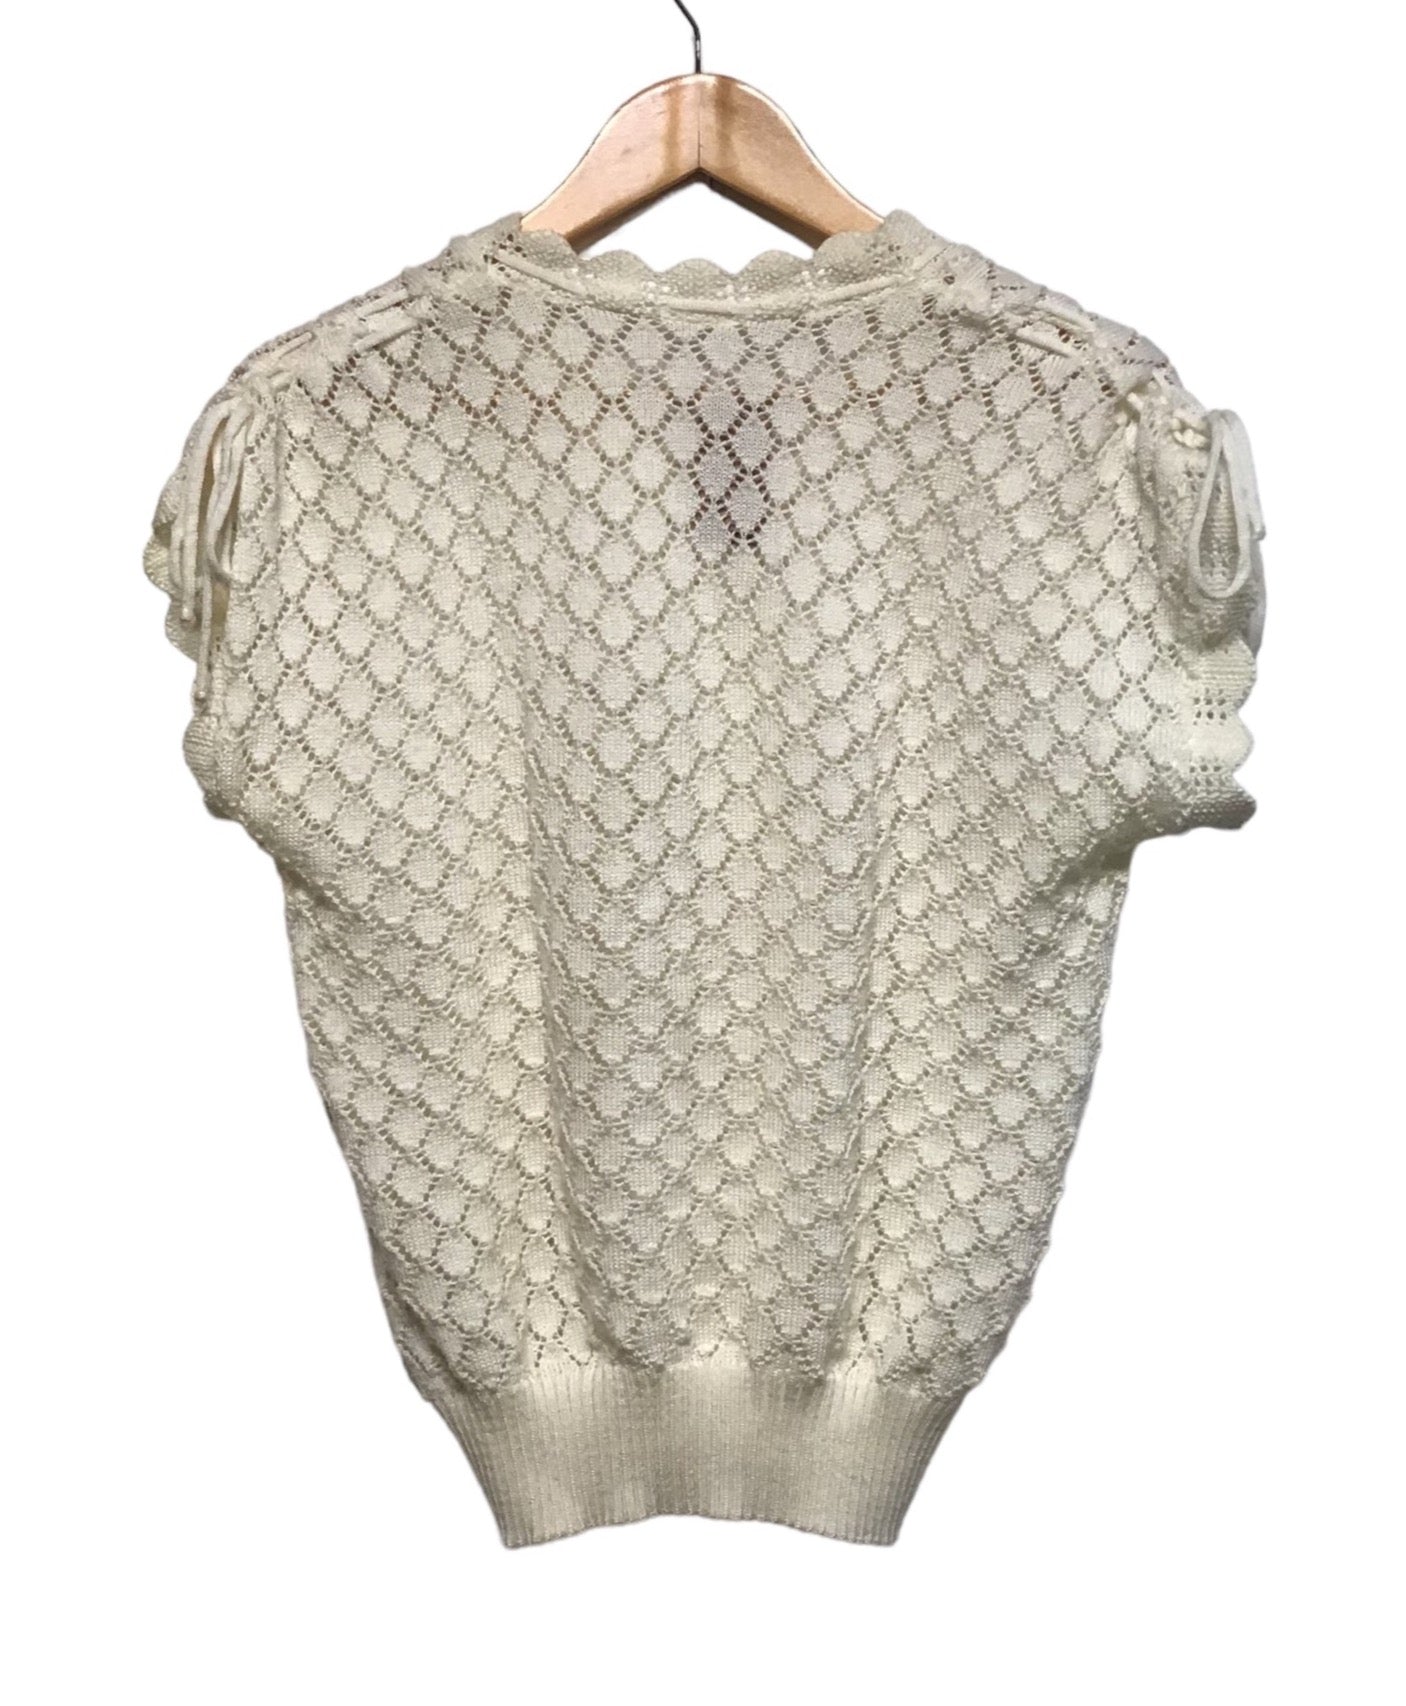 White Open-knit Sweater Vest (Size M)